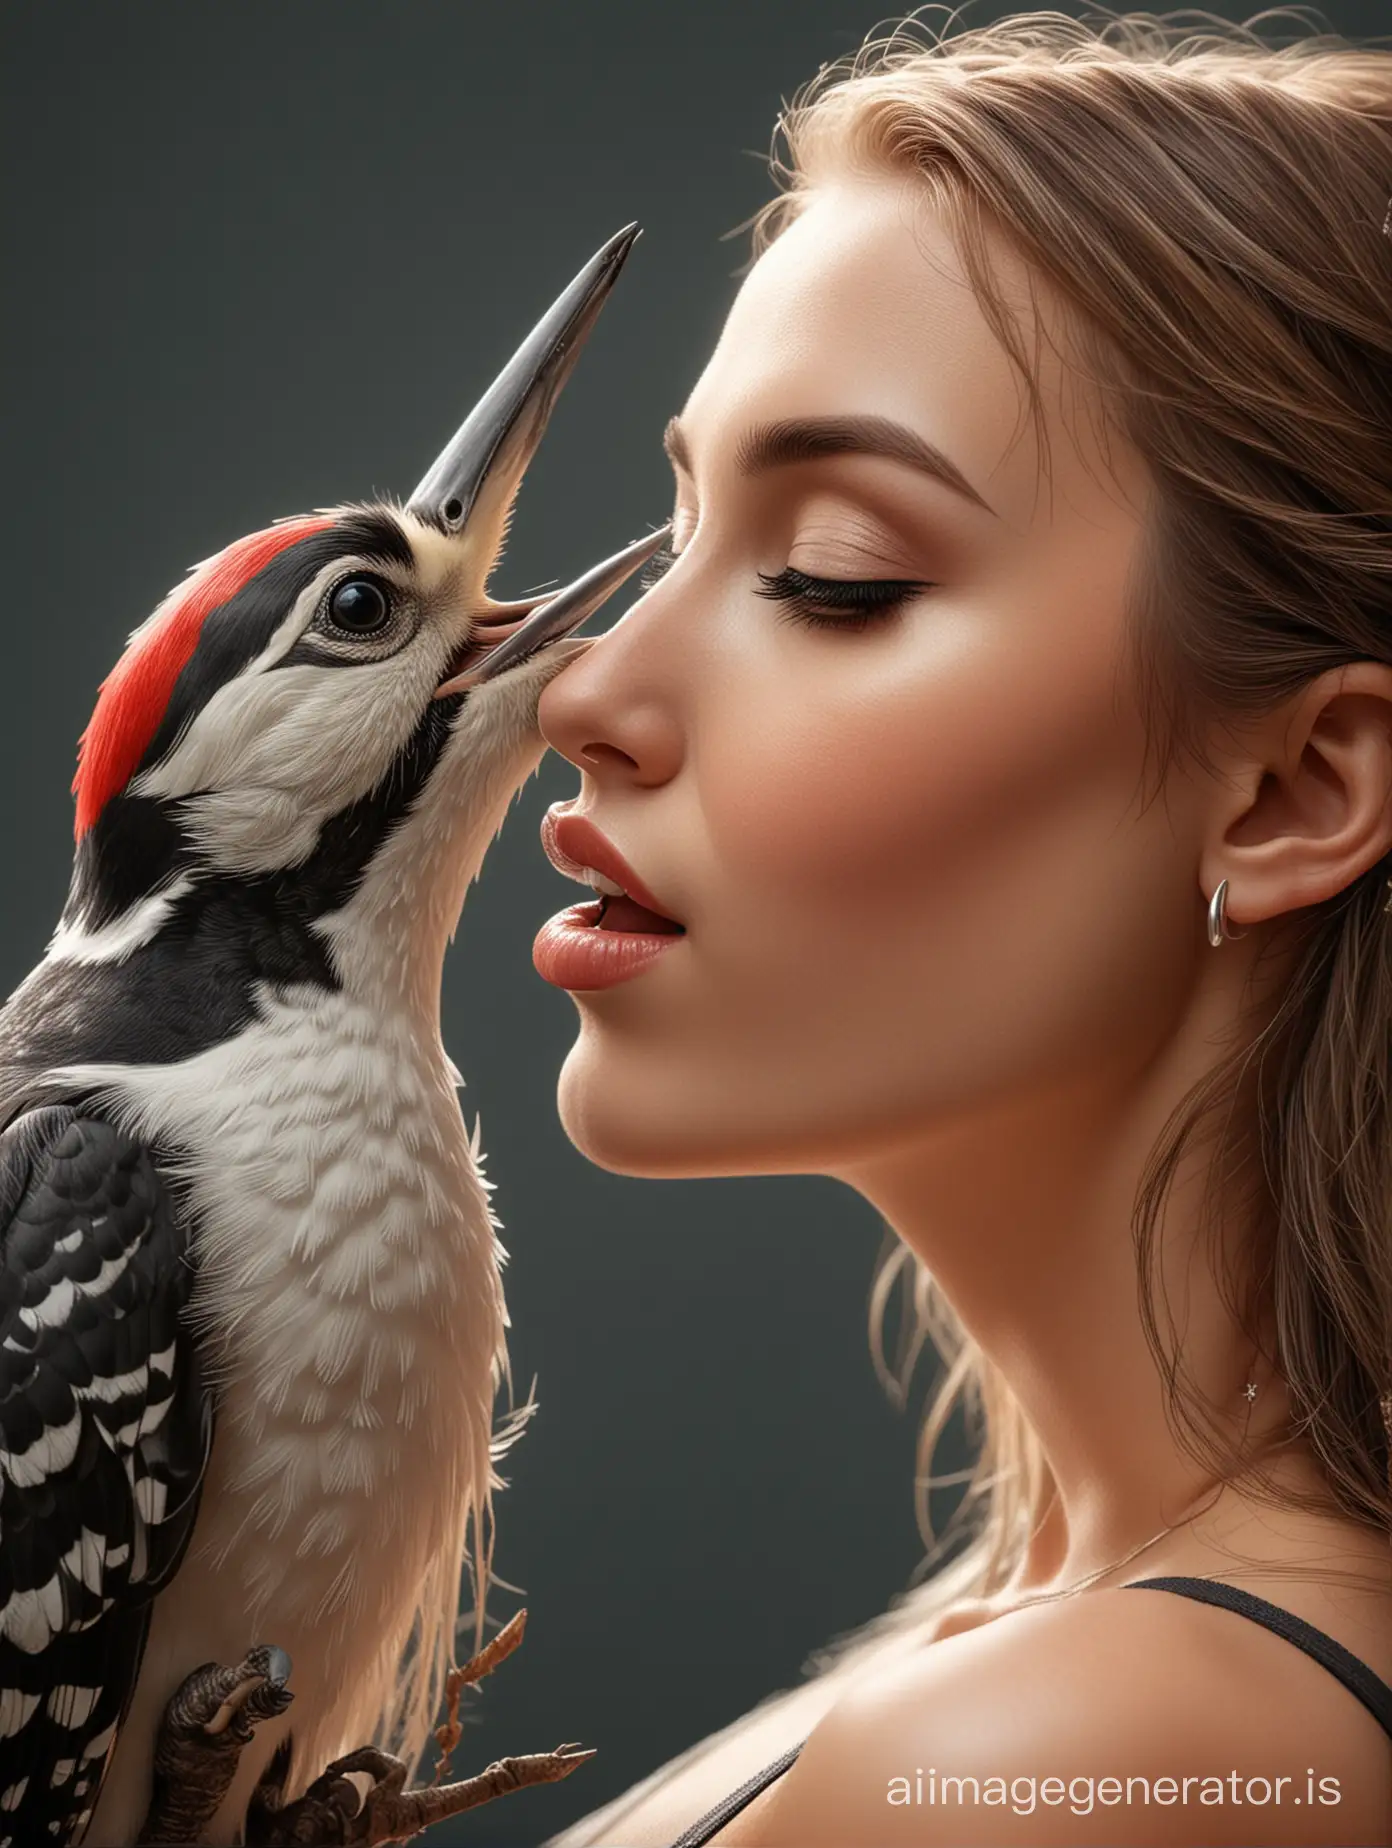 Realistic, High resolution, Logo woodpecker kiss cute sexy woman